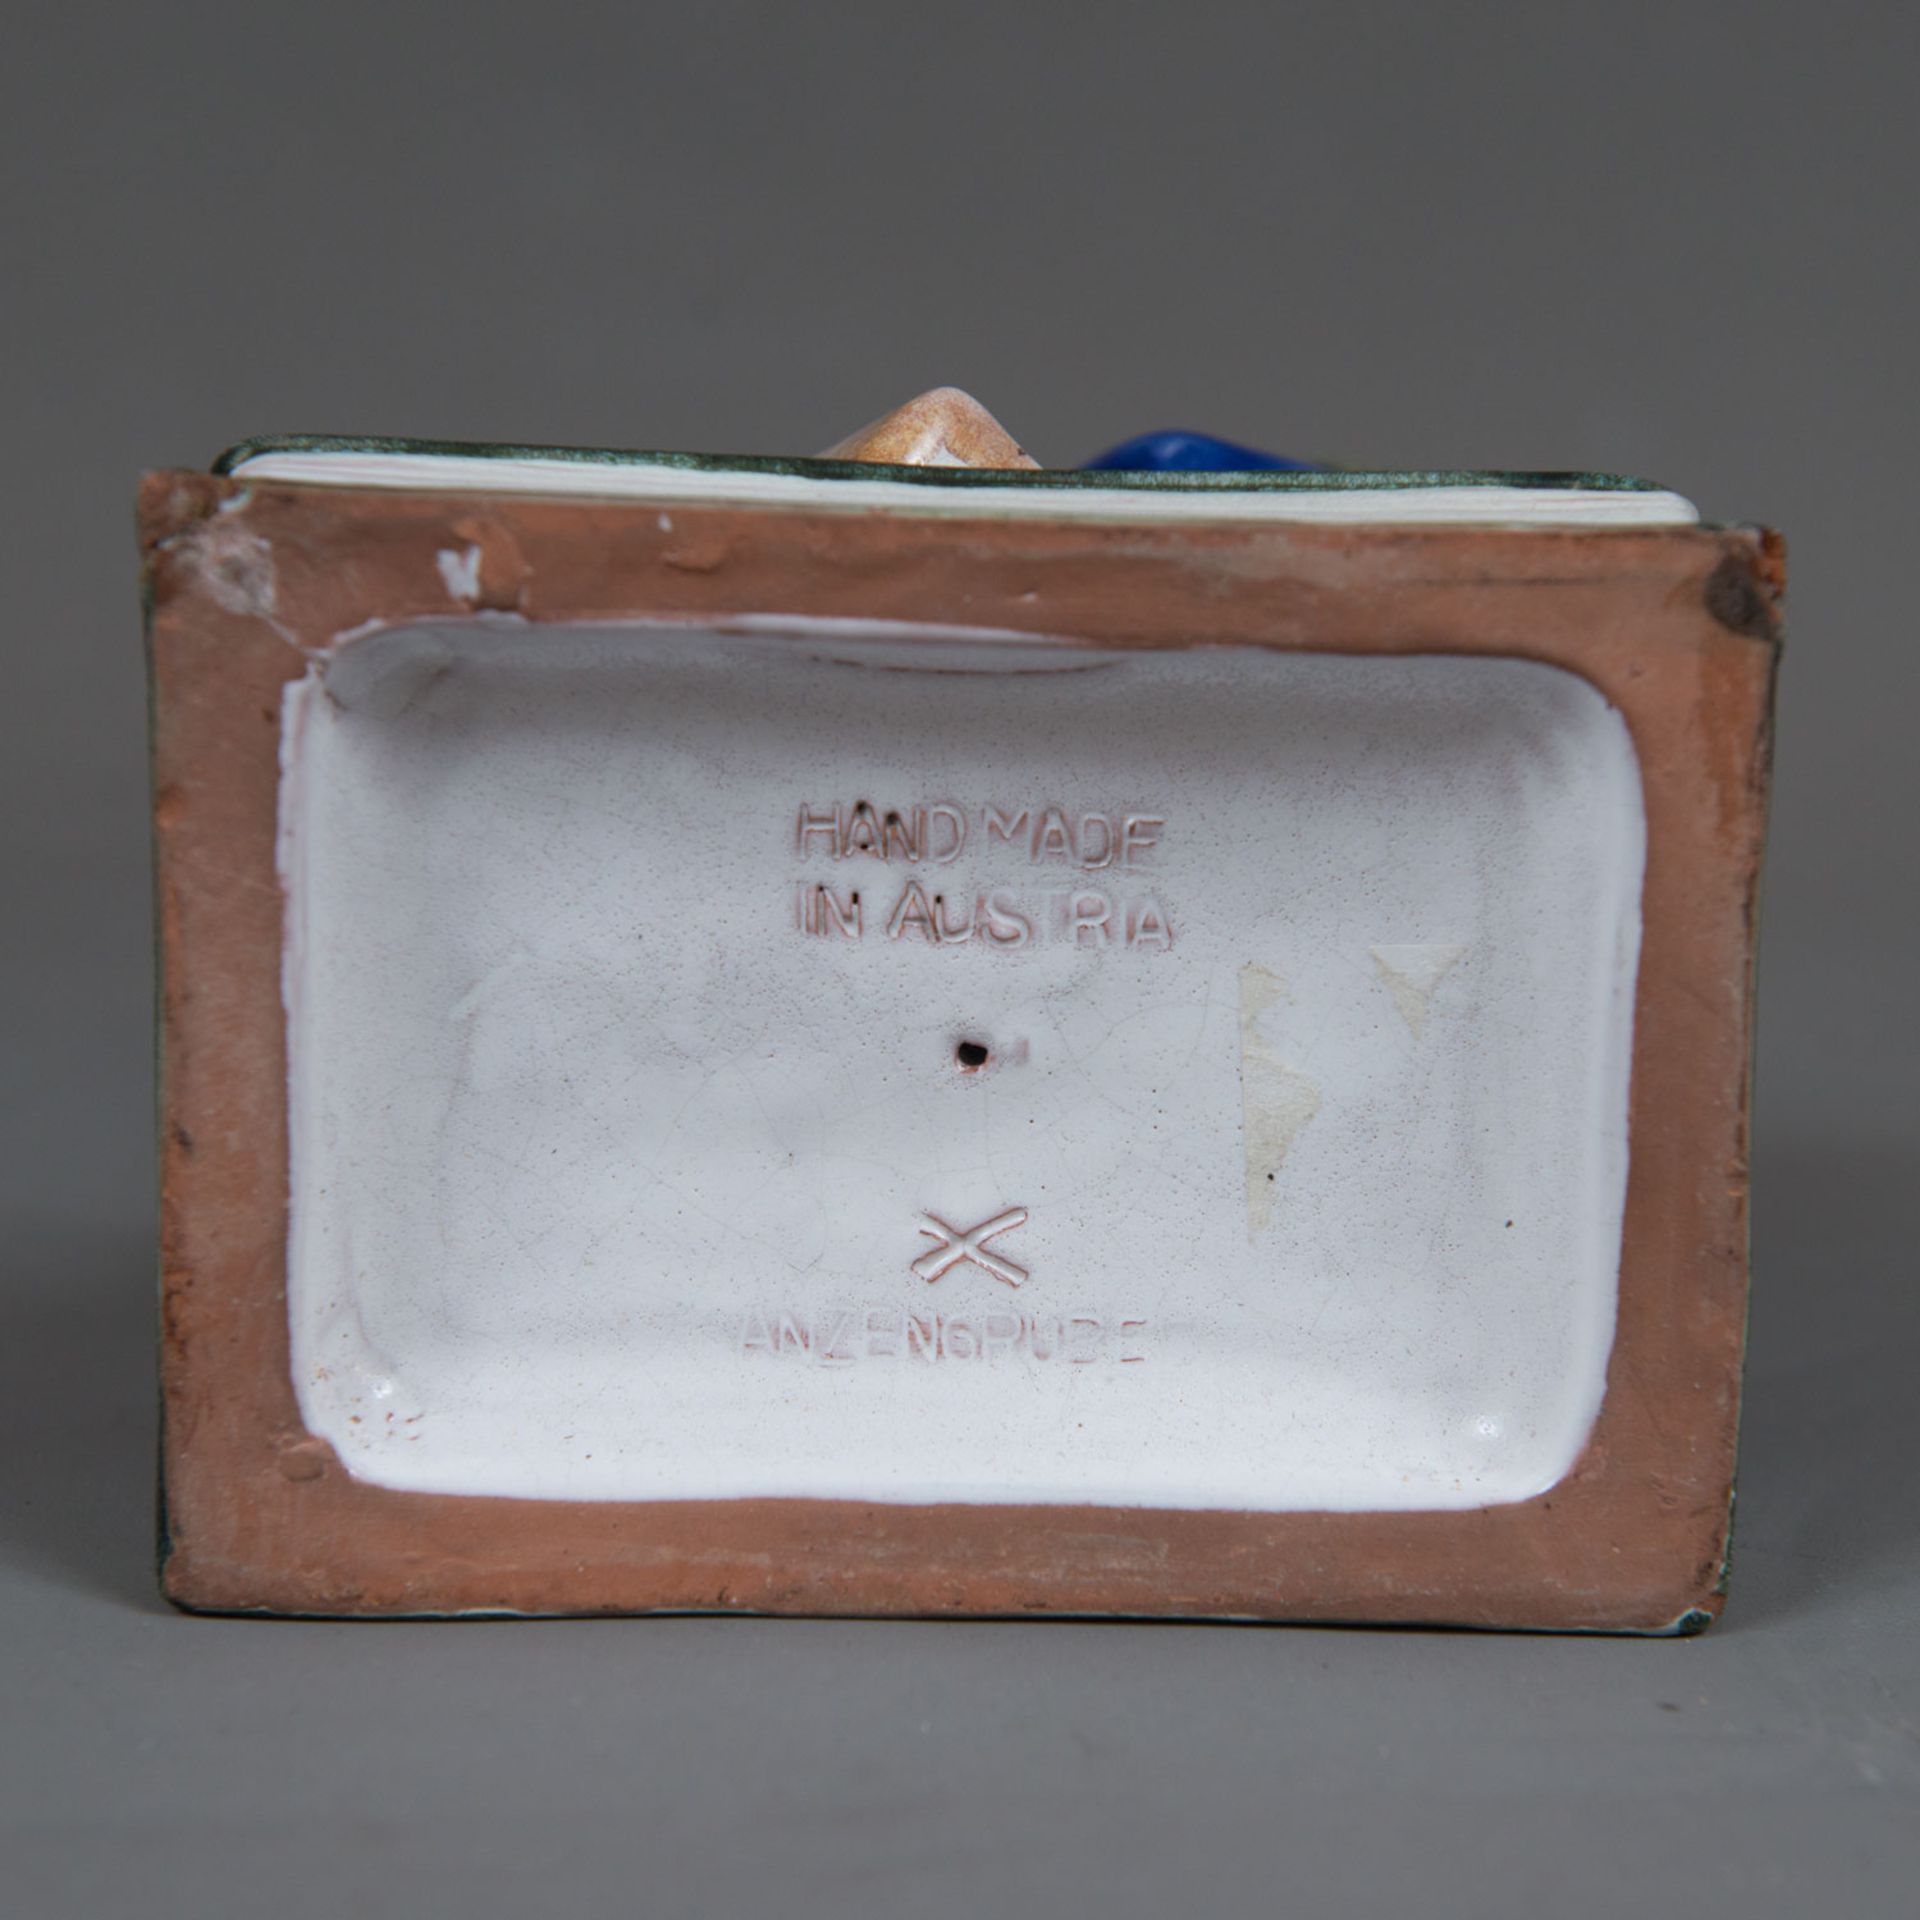 Anzengrube Ceramic - Image 3 of 3